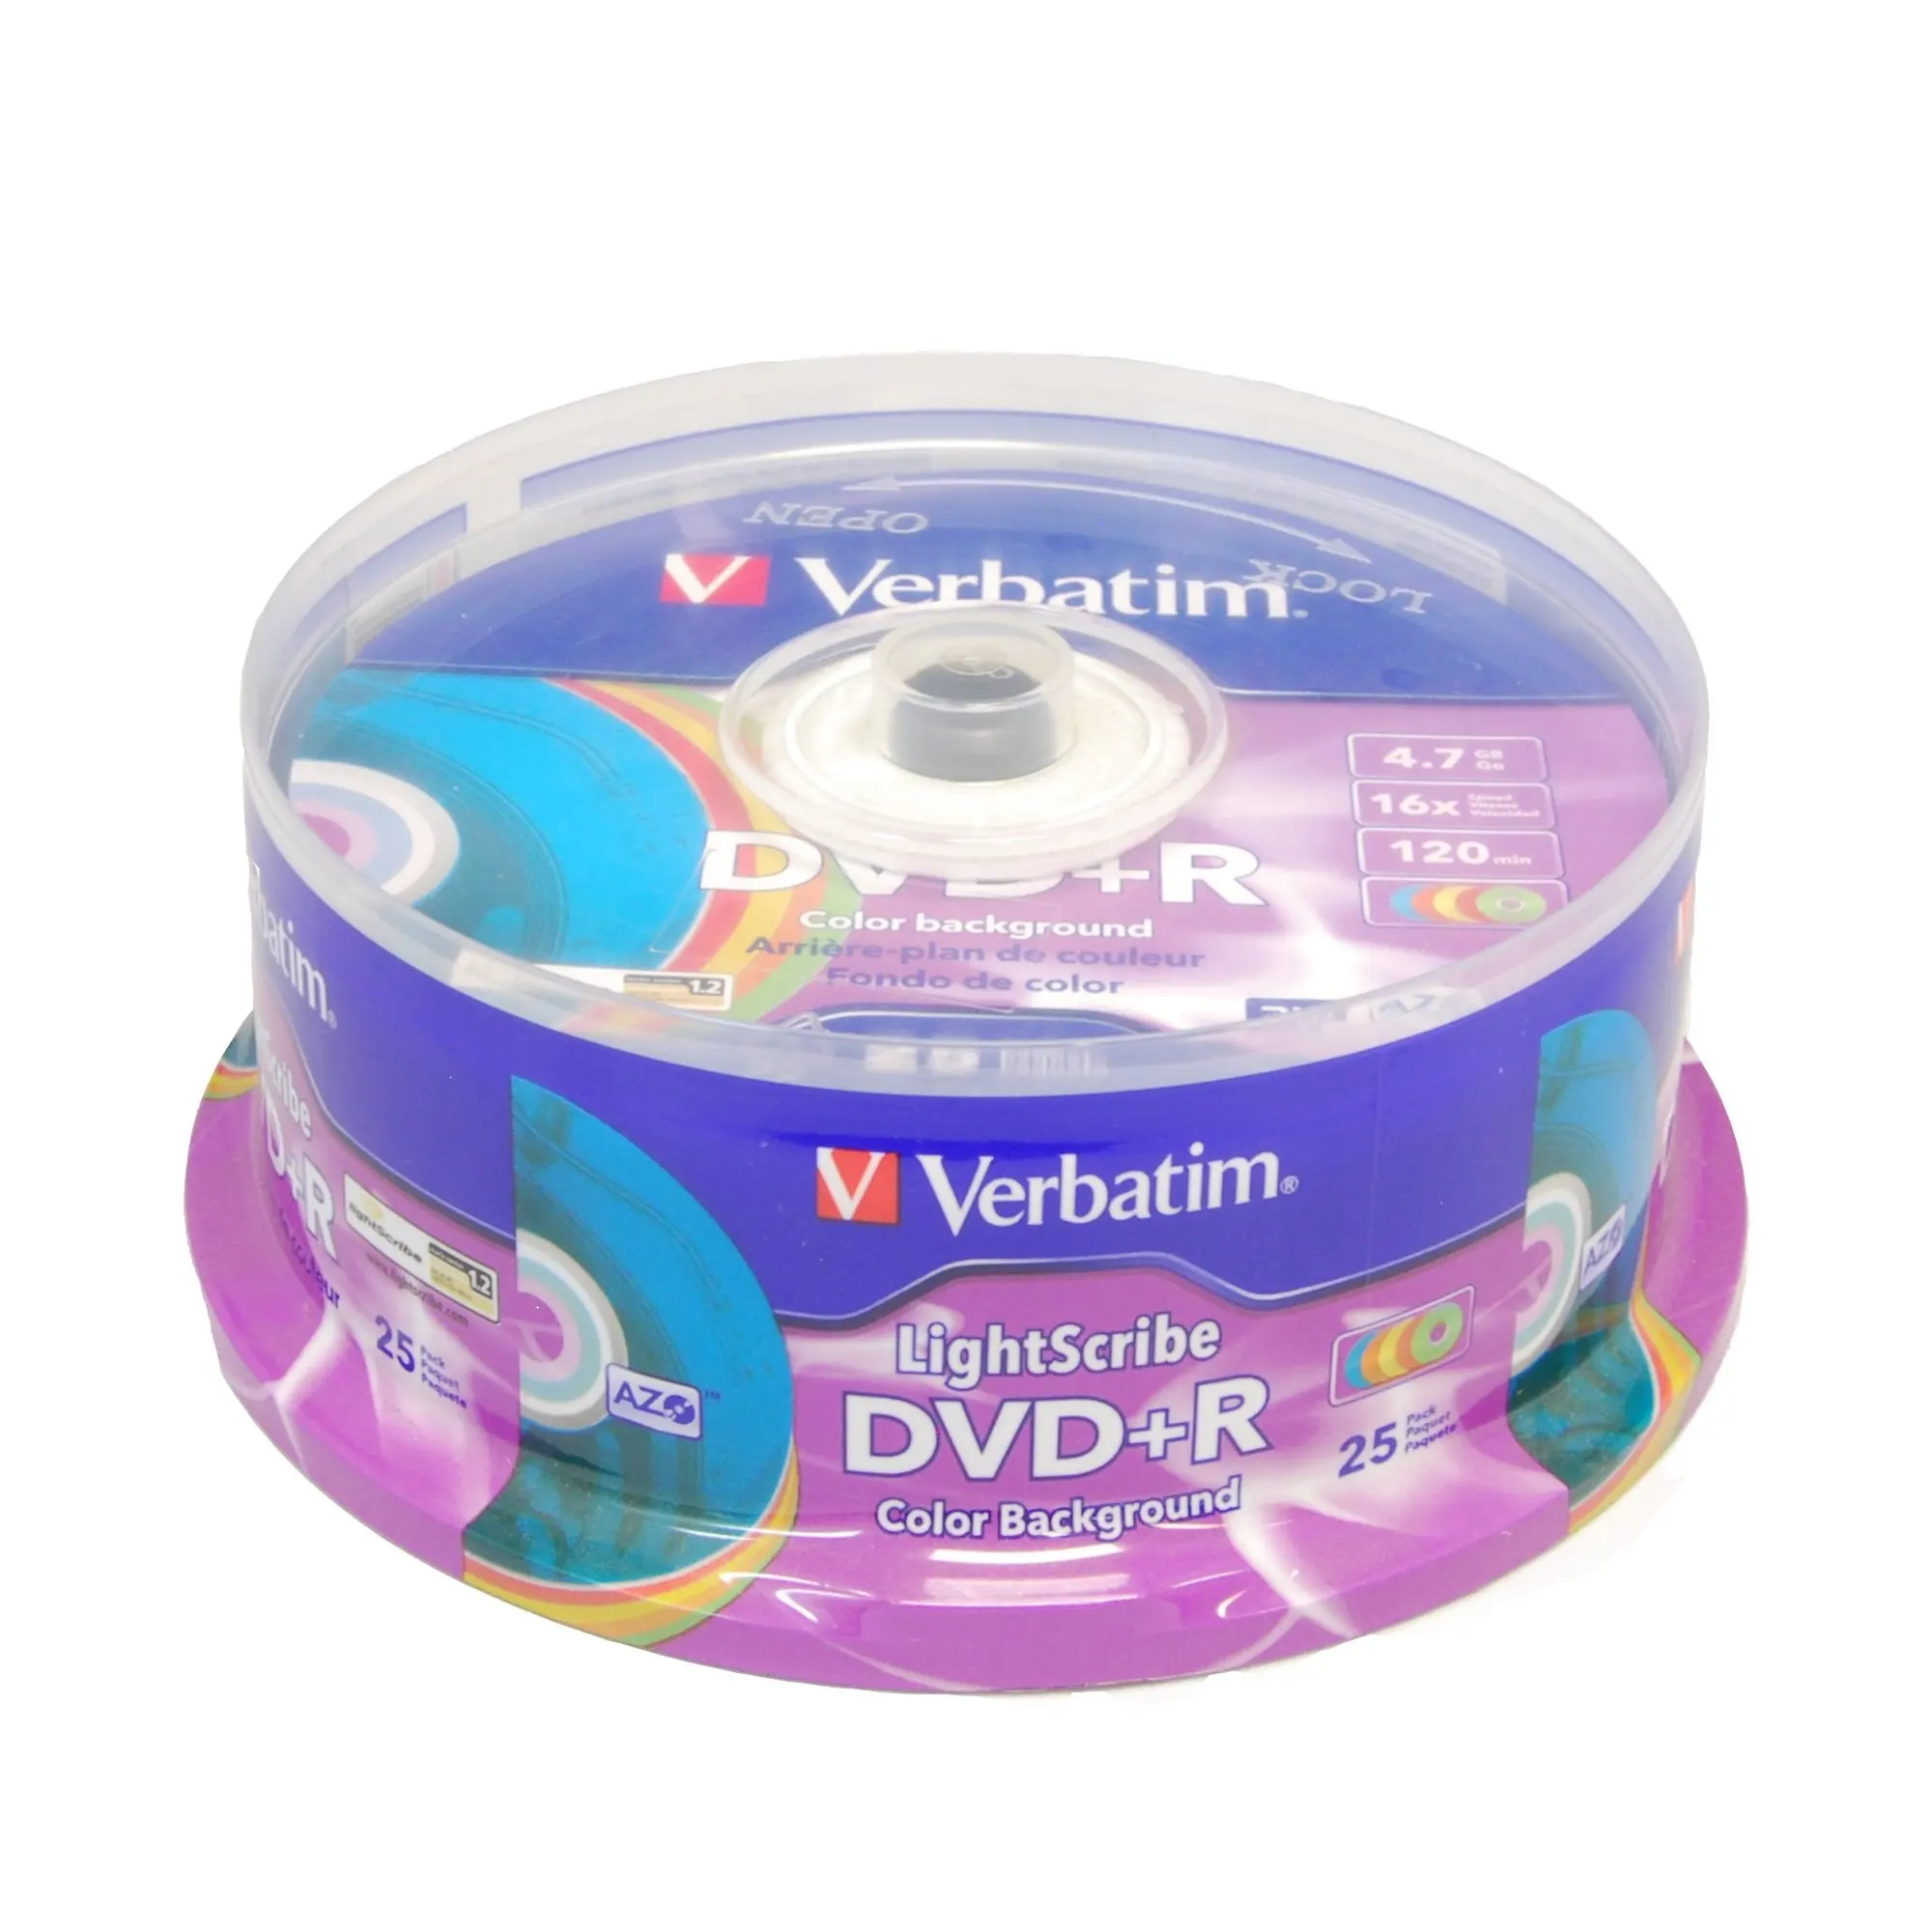 buy-verbatim-16x-dvd-r-lightscribe-color-backgound-recordable-discs-4